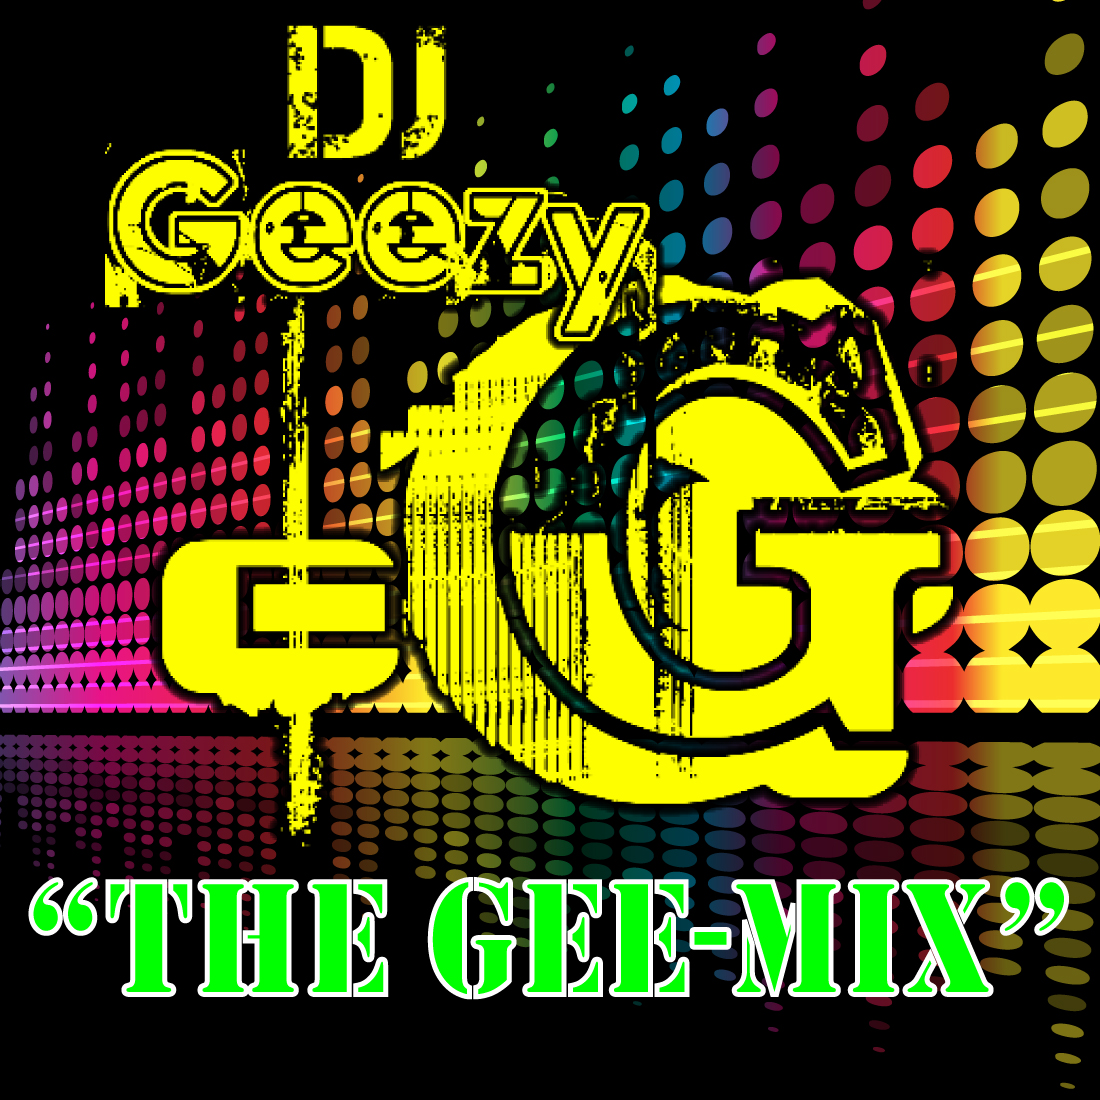 DJ GEEZY G "THE GEE-MIX" (MARCH 11, 2012) PART (1)